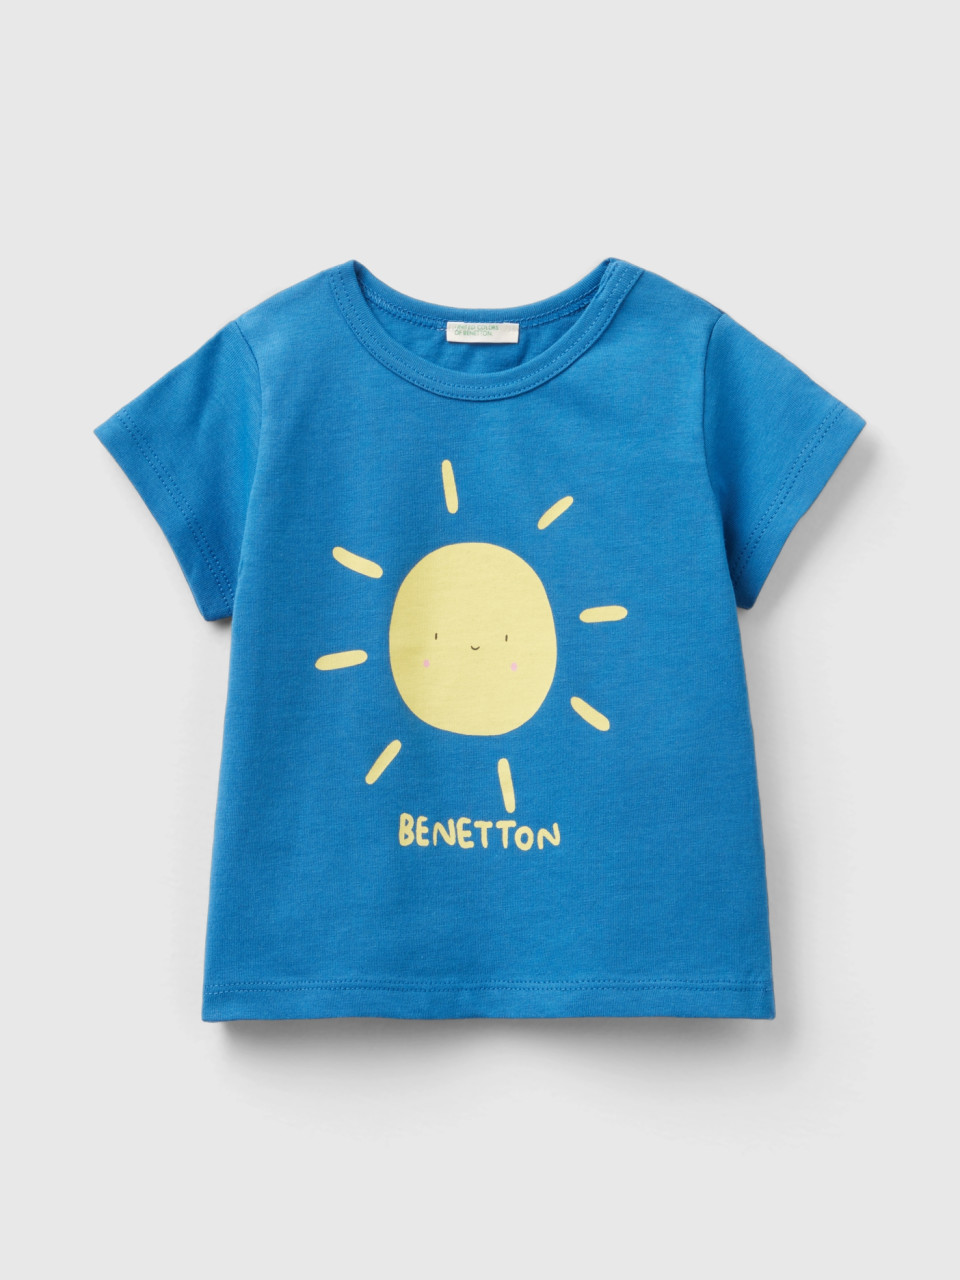 Benetton, Organic Cotton T-shirt With Print, Blue, Kids